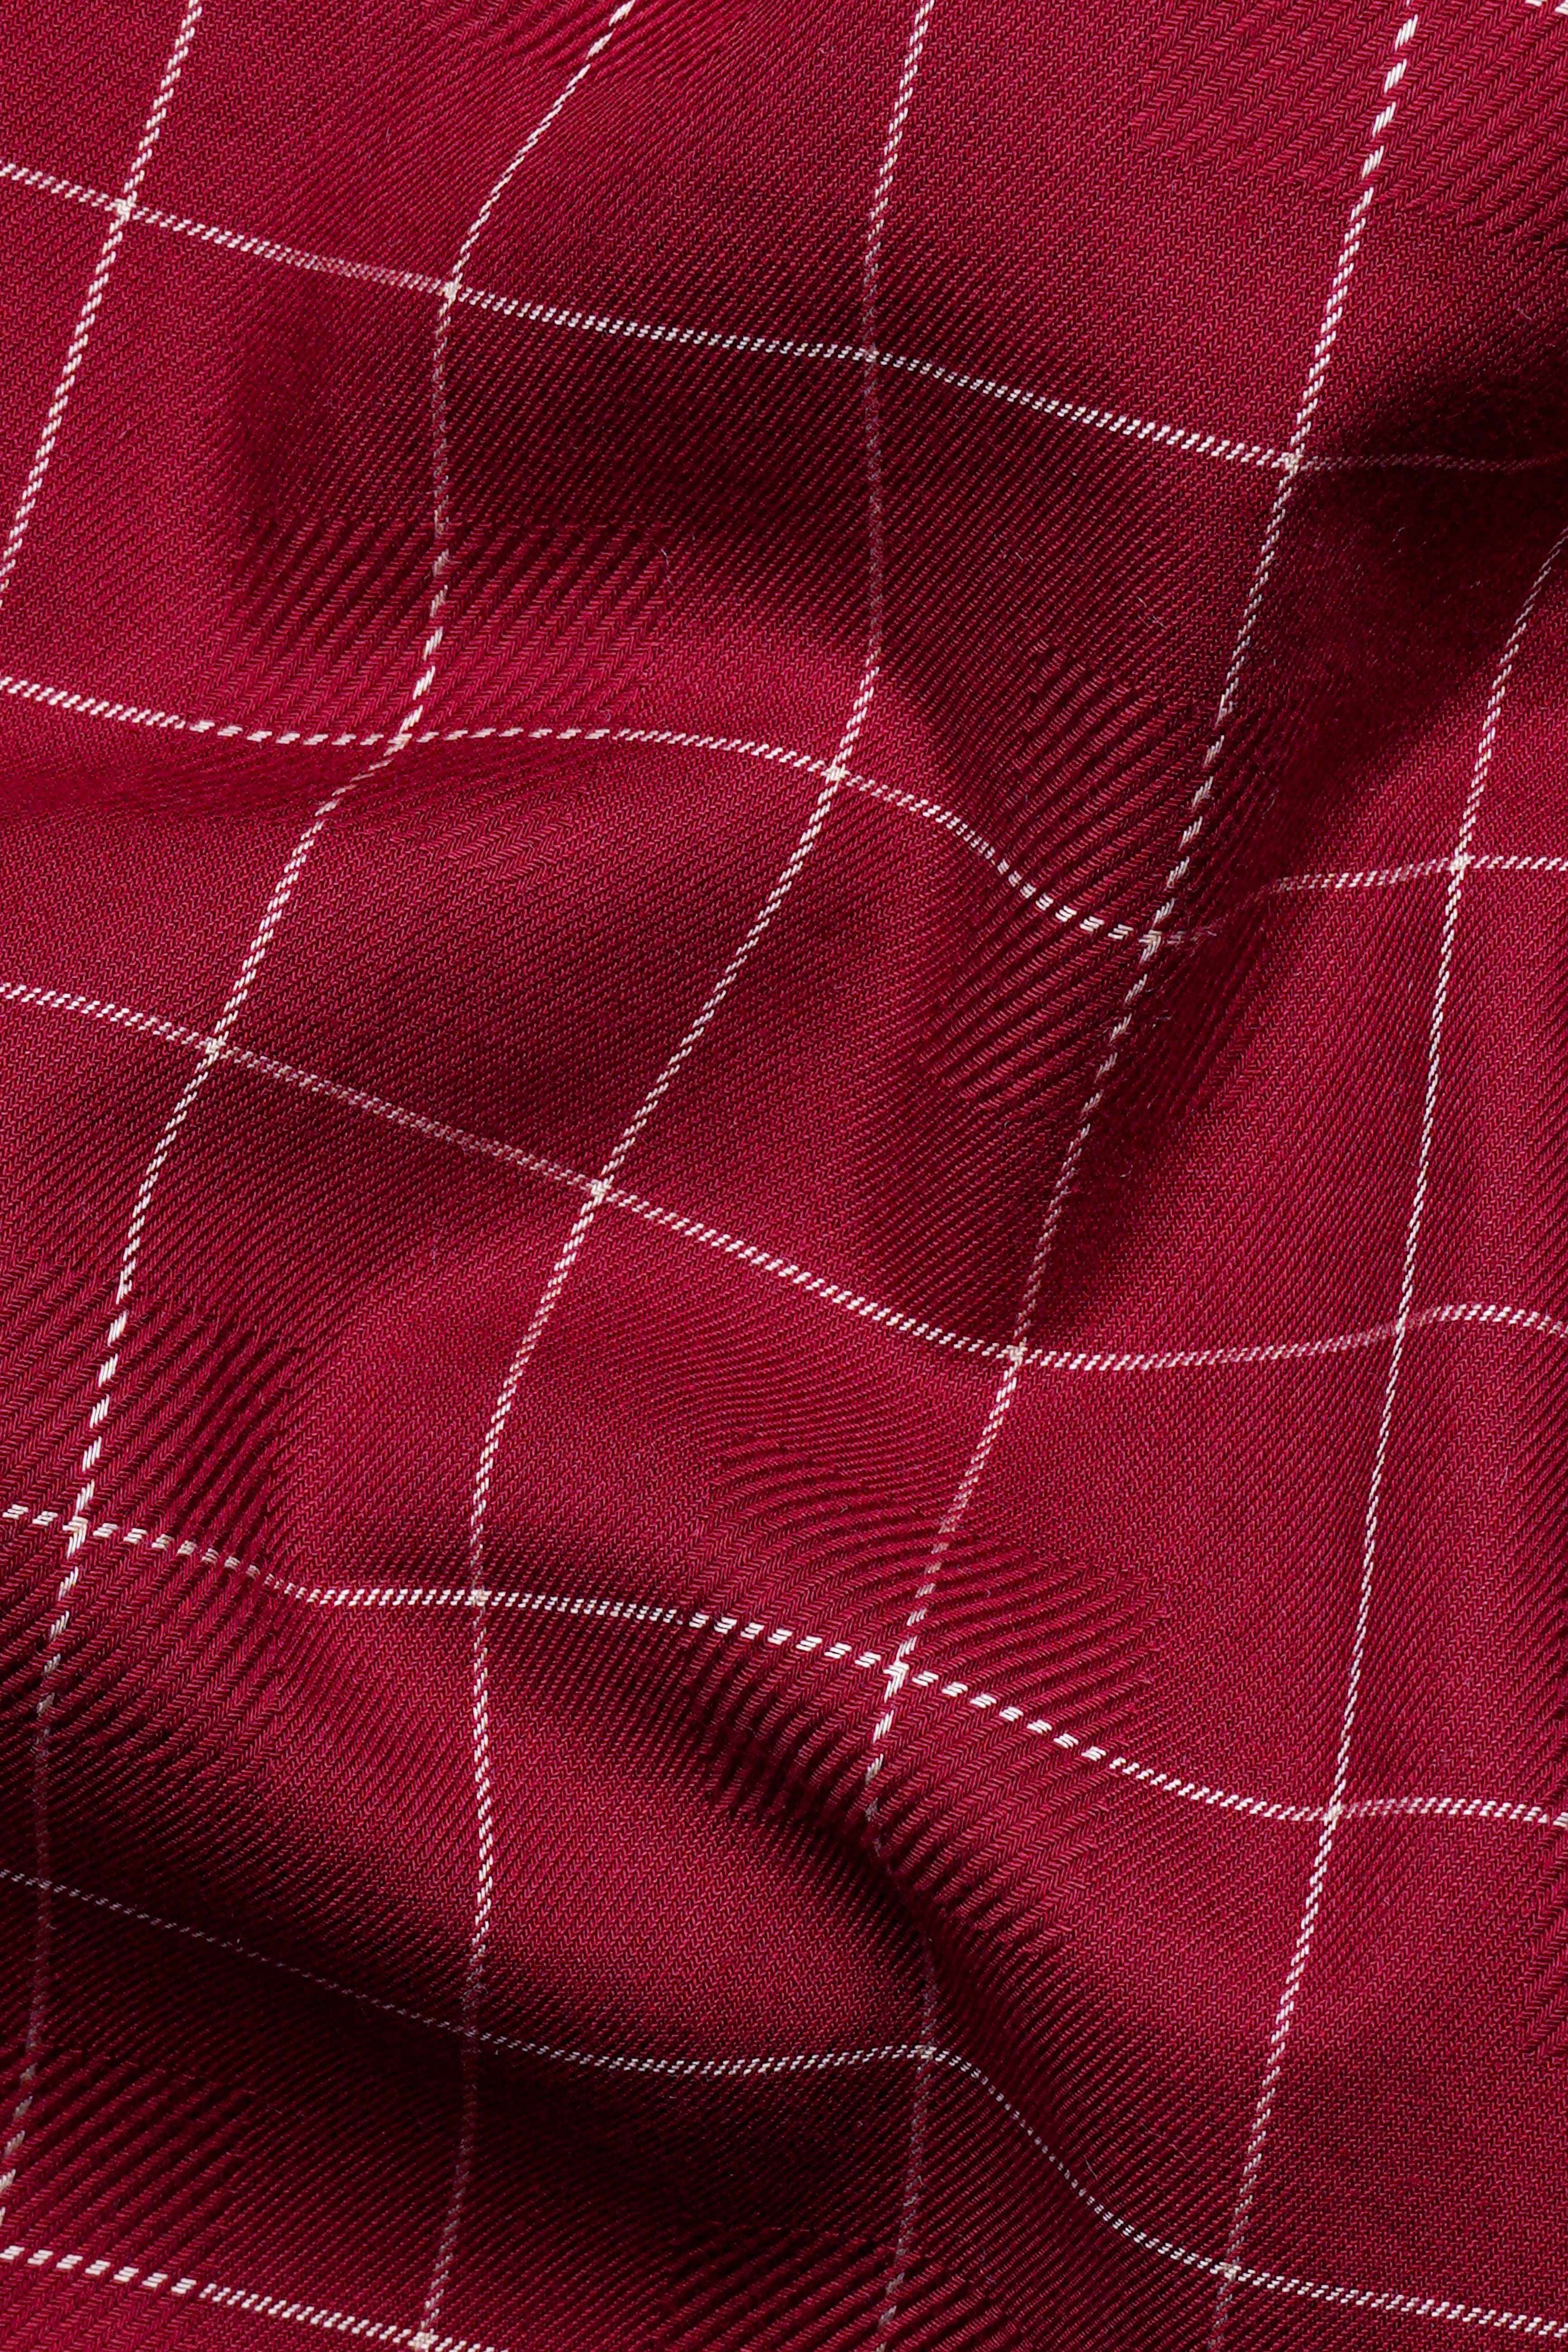 Claret Red Twill Checkered with Wolf Patchwork Premium Cotton Designer Shirt 6190-BLK-E218-38, 6190-BLK-E218-H-38, 6190-BLK-E218-39, 6190-BLK-E218-H-39, 6190-BLK-E218-40, 6190-BLK-E218-H-40, 6190-BLK-E218-42, 6190-BLK-E218-H-42, 6190-BLK-E218-44, 6190-BLK-E218-H-44, 6190-BLK-E218-46, 6190-BLK-E218-H-46, 6190-BLK-E218-48, 6190-BLK-E218-H-48, 6190-BLK-E218-50, 6190-BLK-E218-H-50, 6190-BLK-E218-52, 6190-BLK-E218-H-52